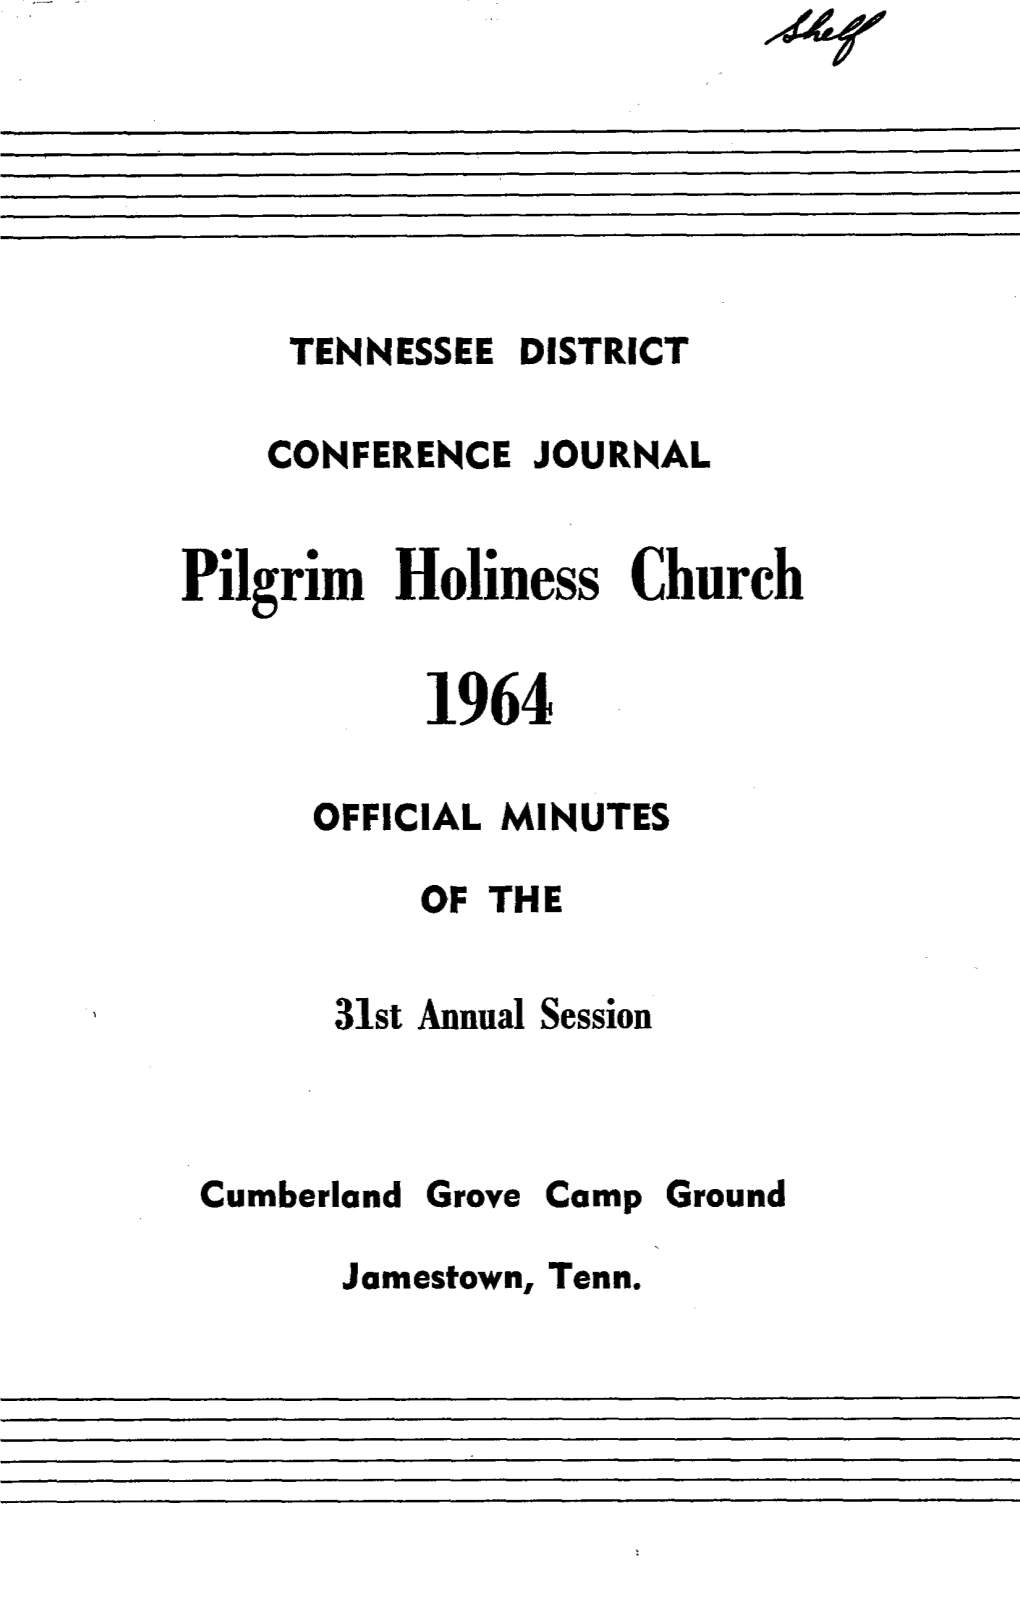 Pilgrim Holiness Church 1964